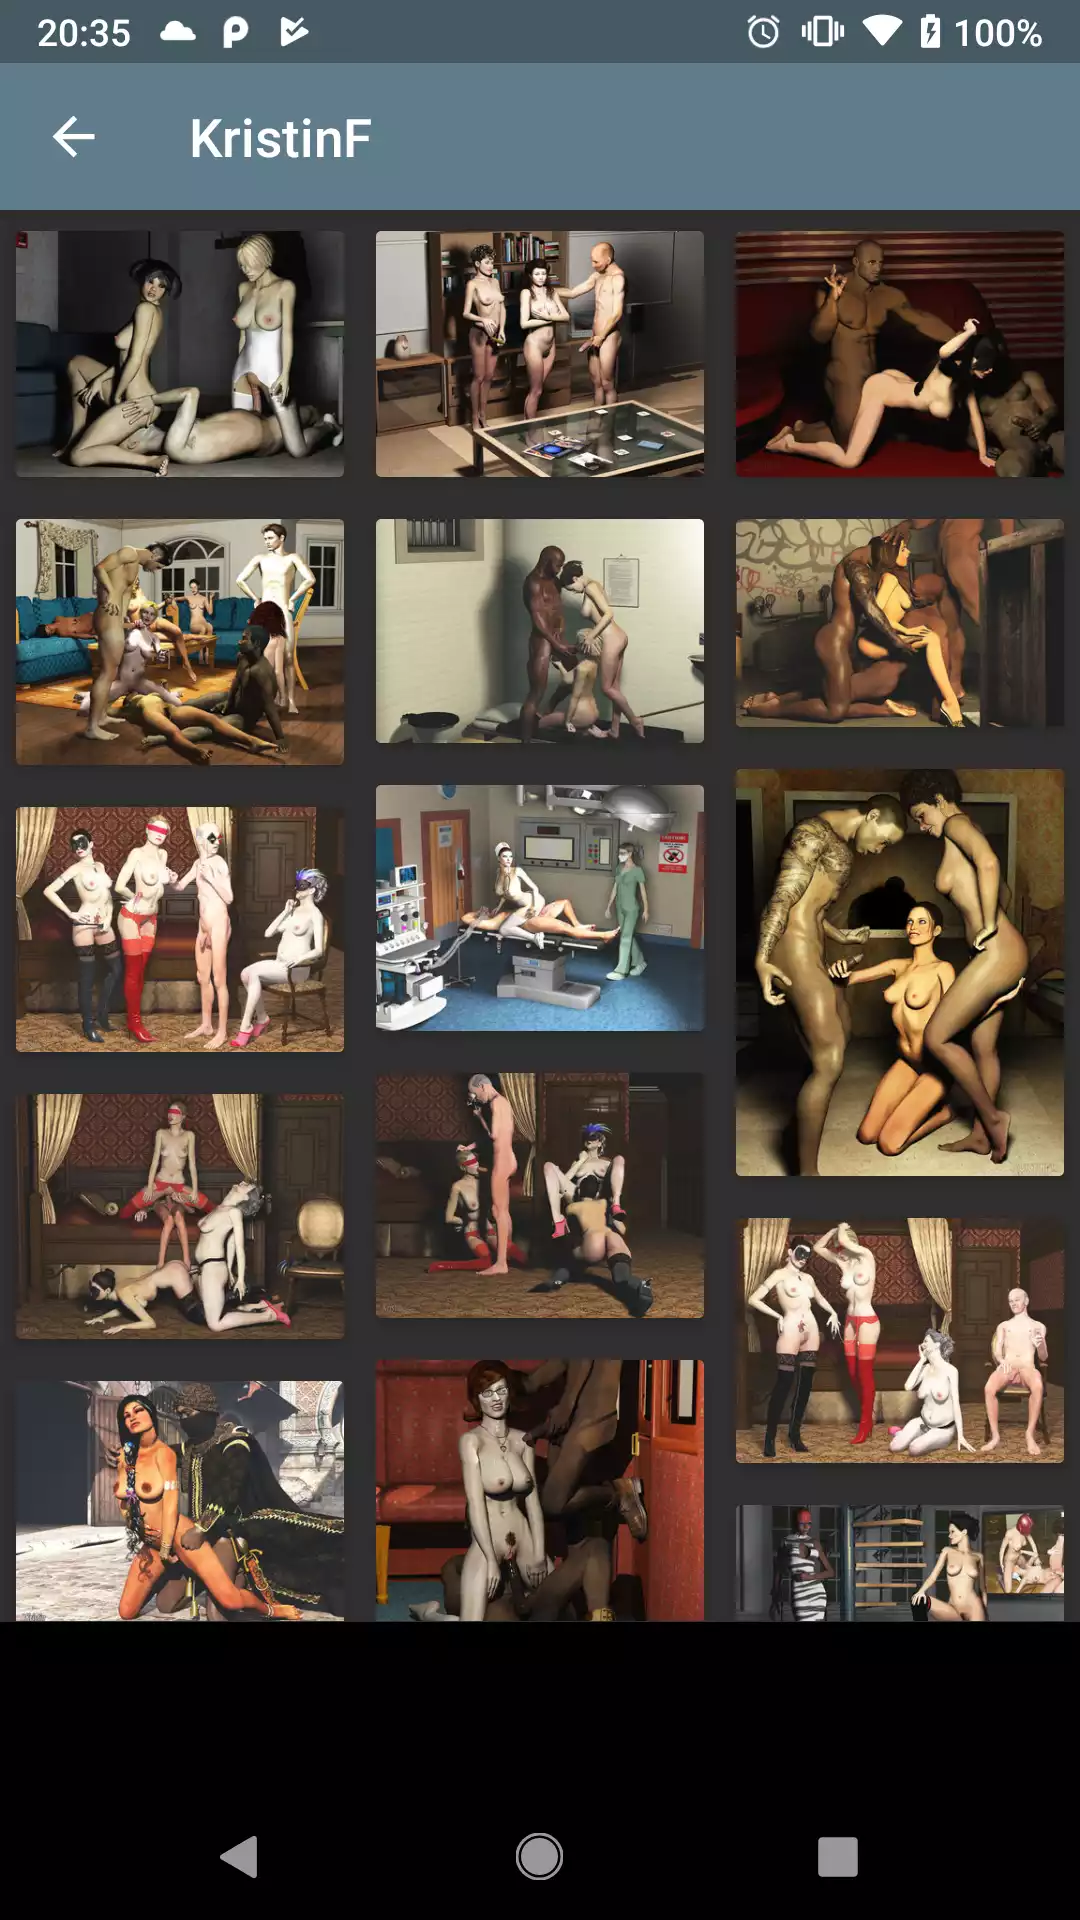 KristinF artwork pornstar,gallery,free,android,hentai,ios,app,kink,comics,drawings,apk,picks,futanari,wallpaper,wallpapers,porn,apps,topless,puzzle,download,gallerys,sexy